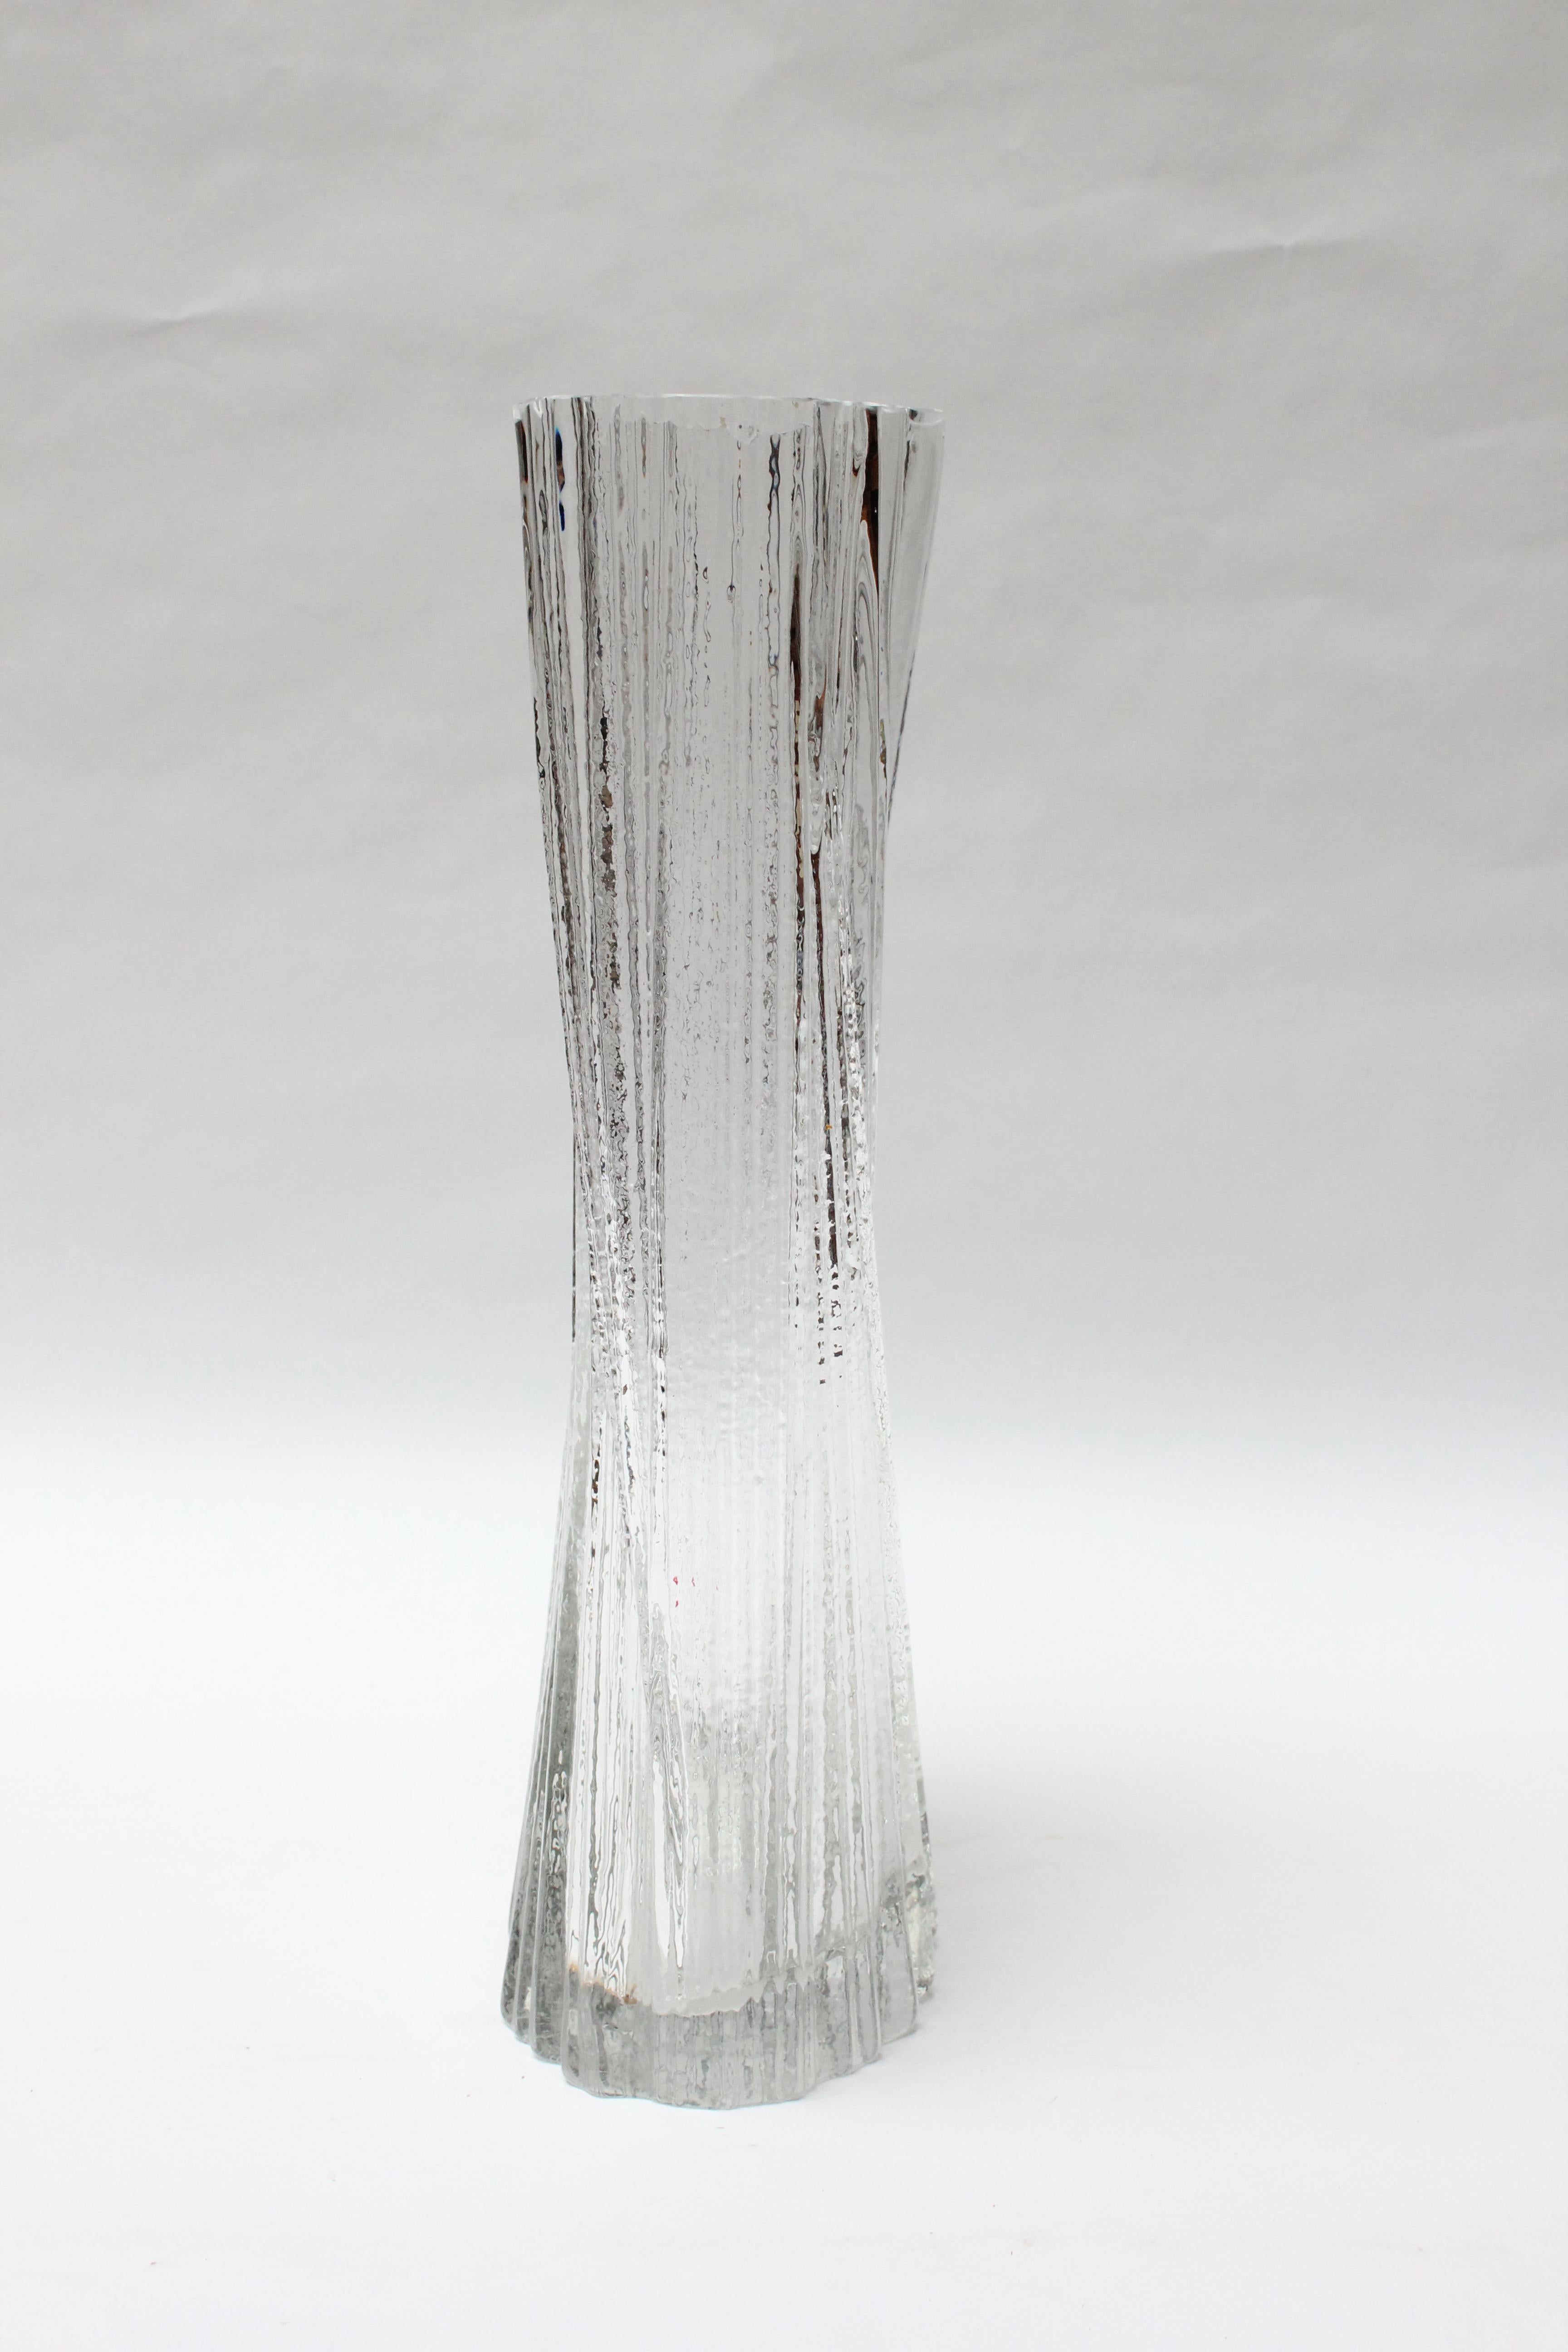 Scandinavian Modern Large Mid-Century Modern Glass Vase by Tapio Wirkkala For Sale